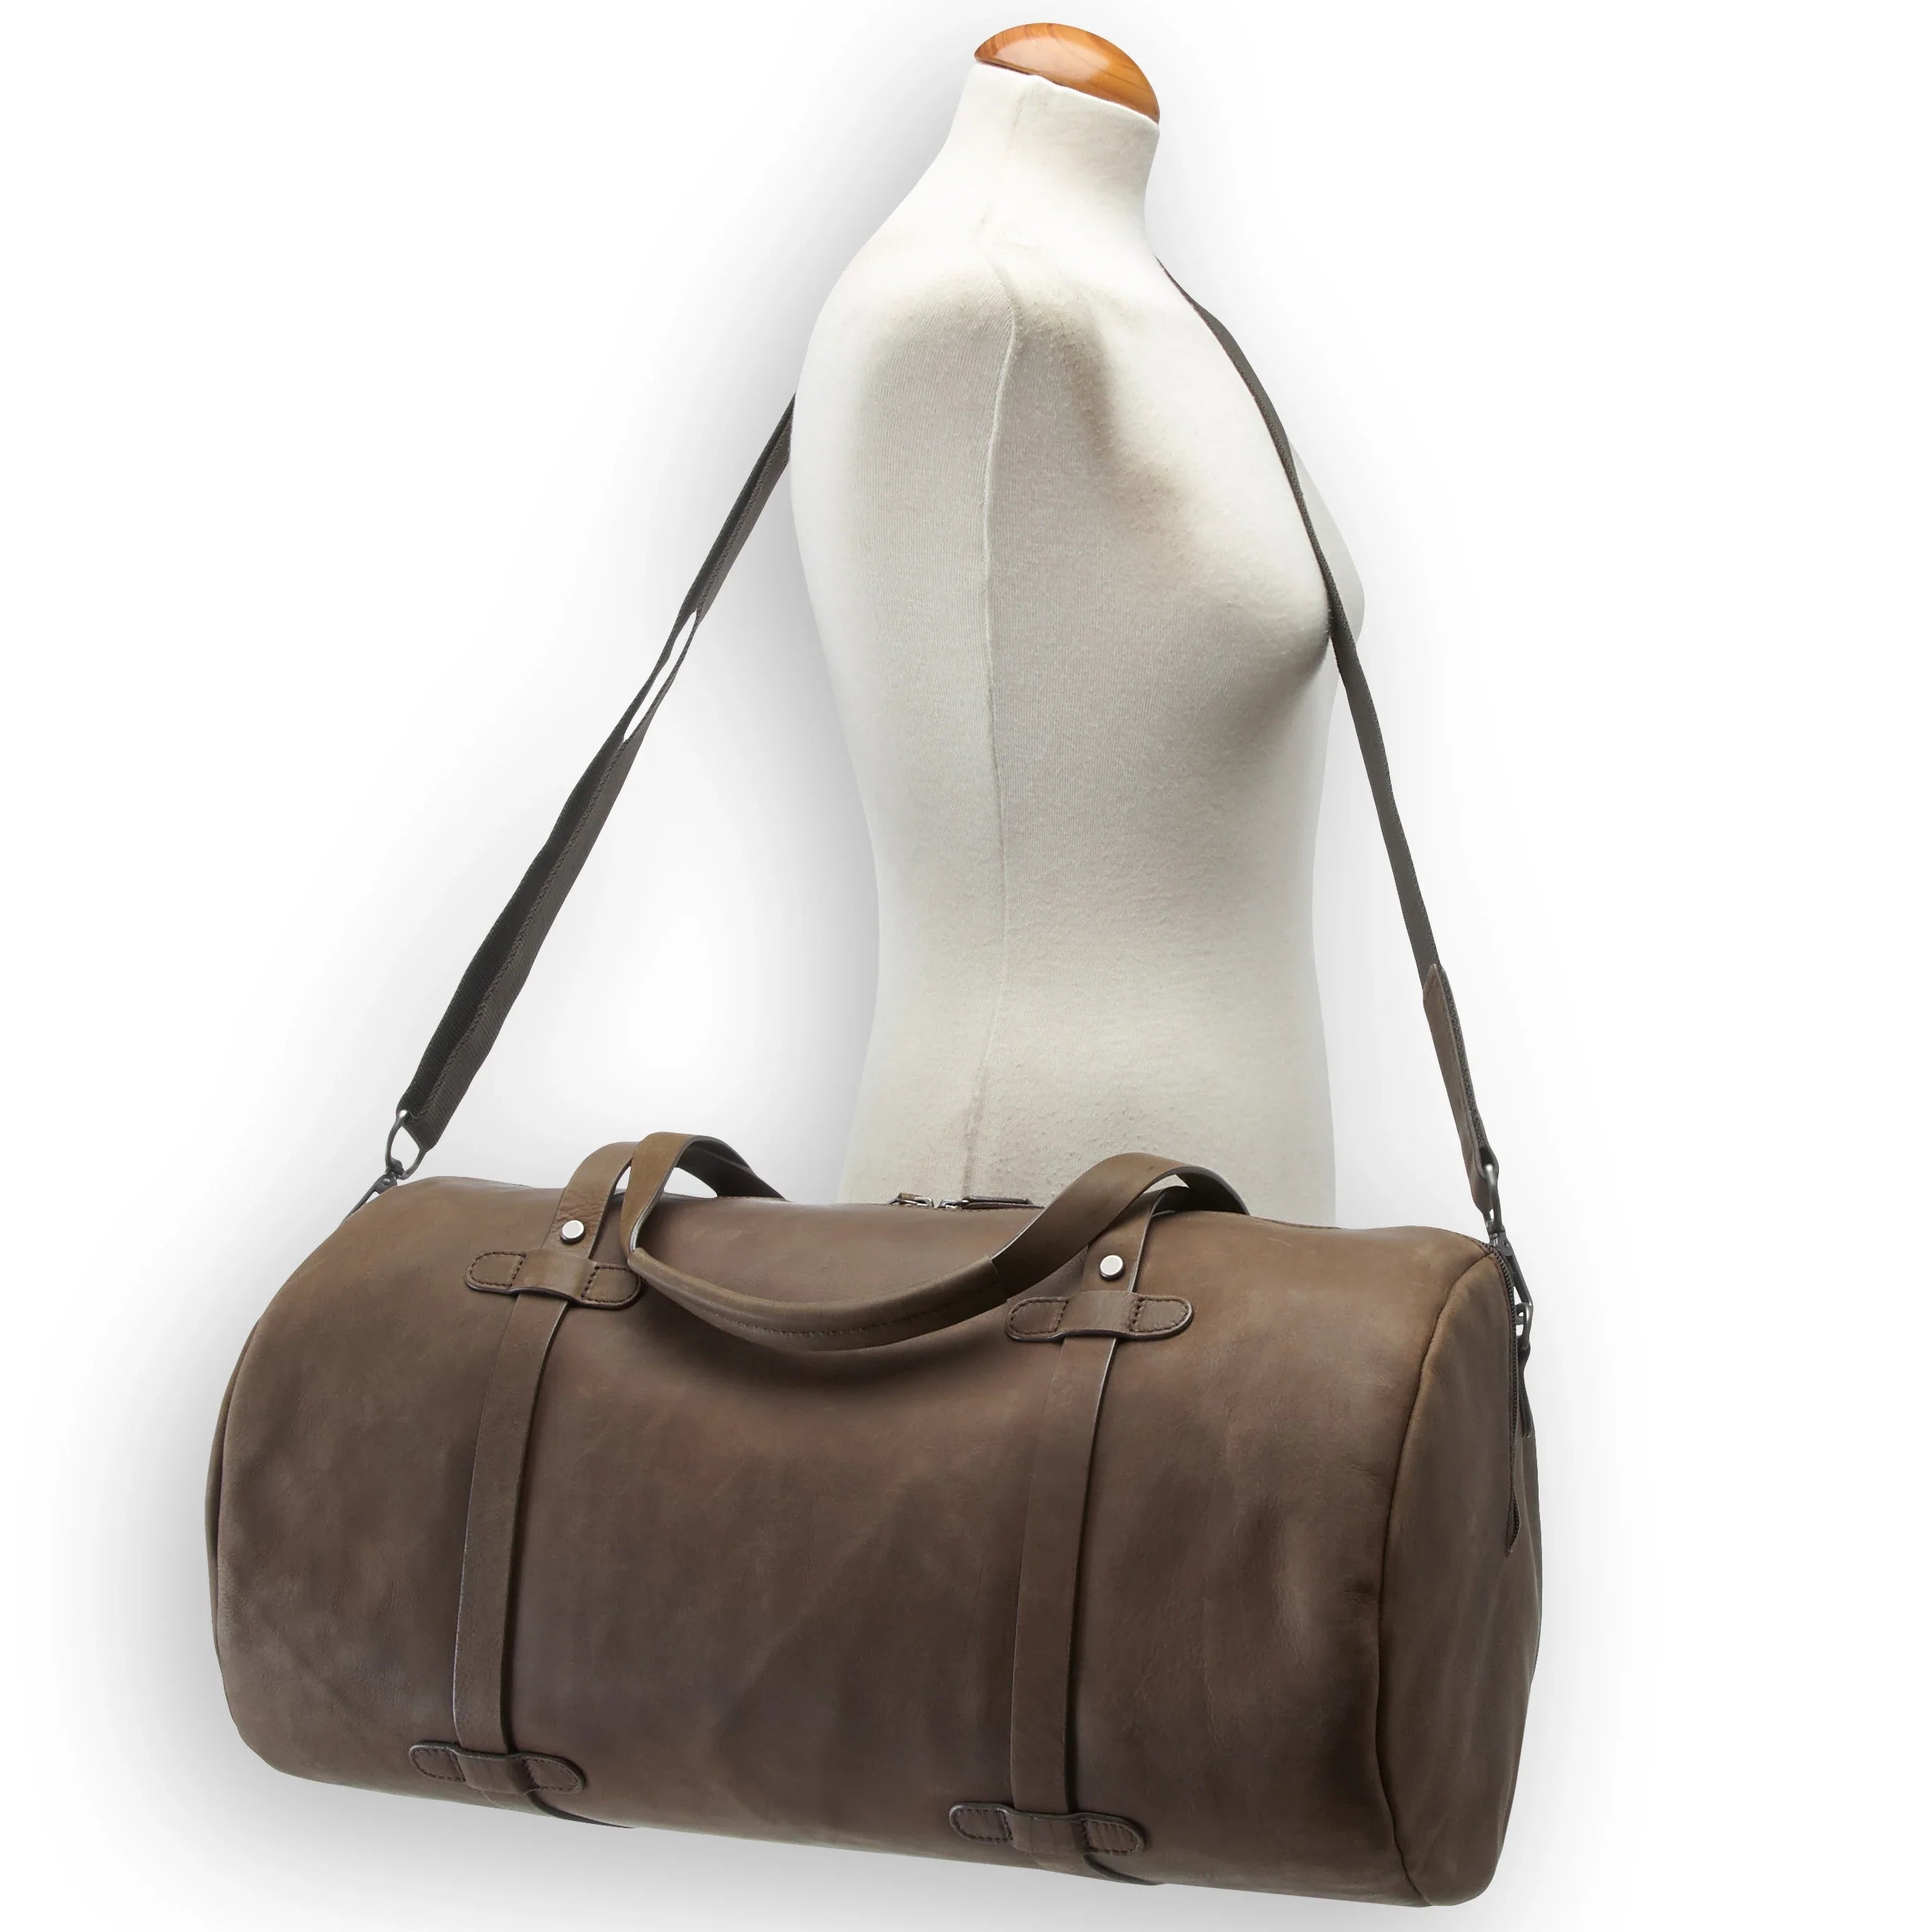 Jost Salo travel bag 50 cm - brown